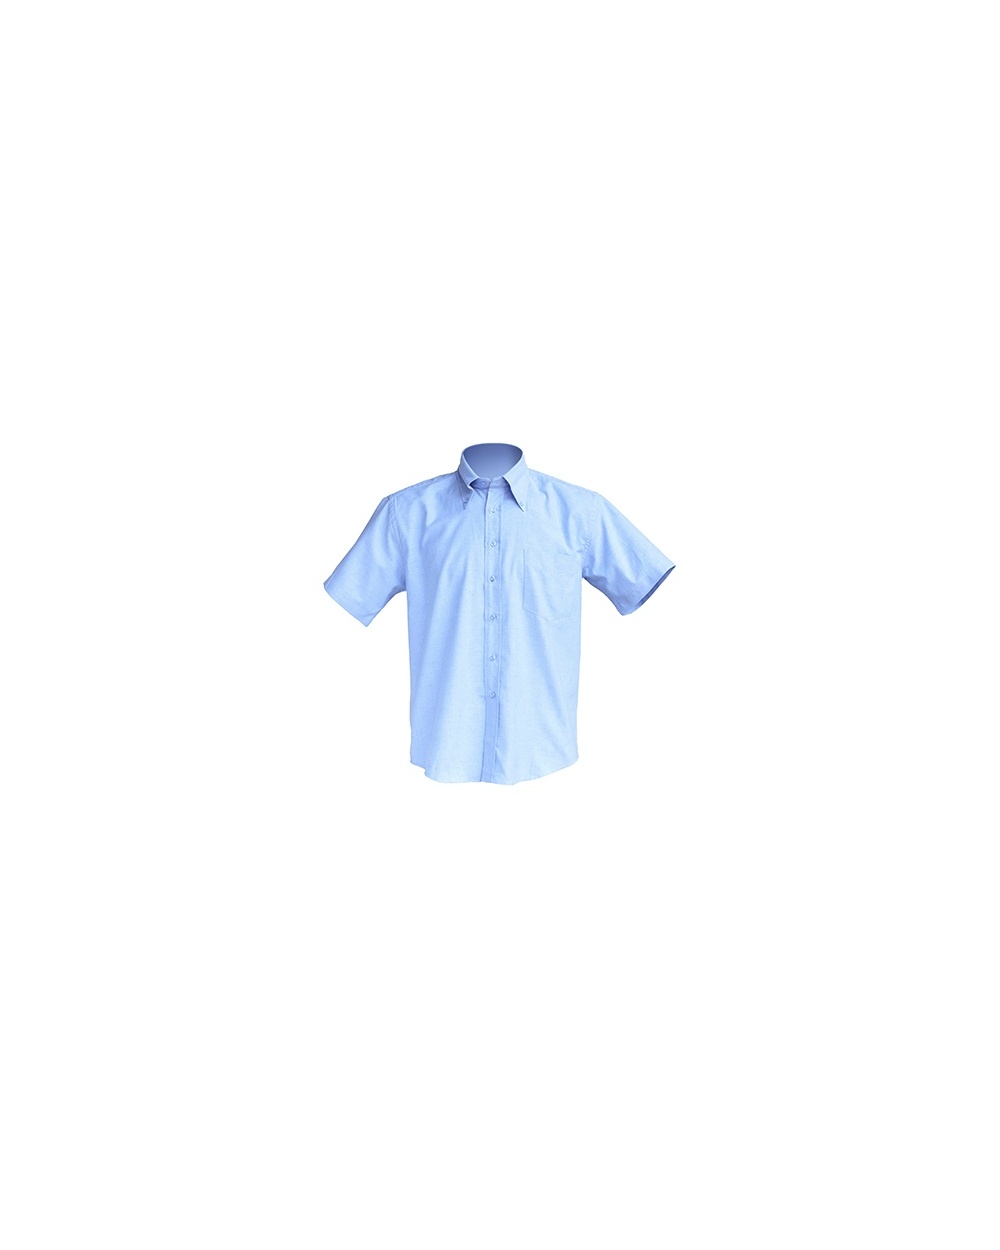 camisa jhk manga corta SHRASSOXF azul claro